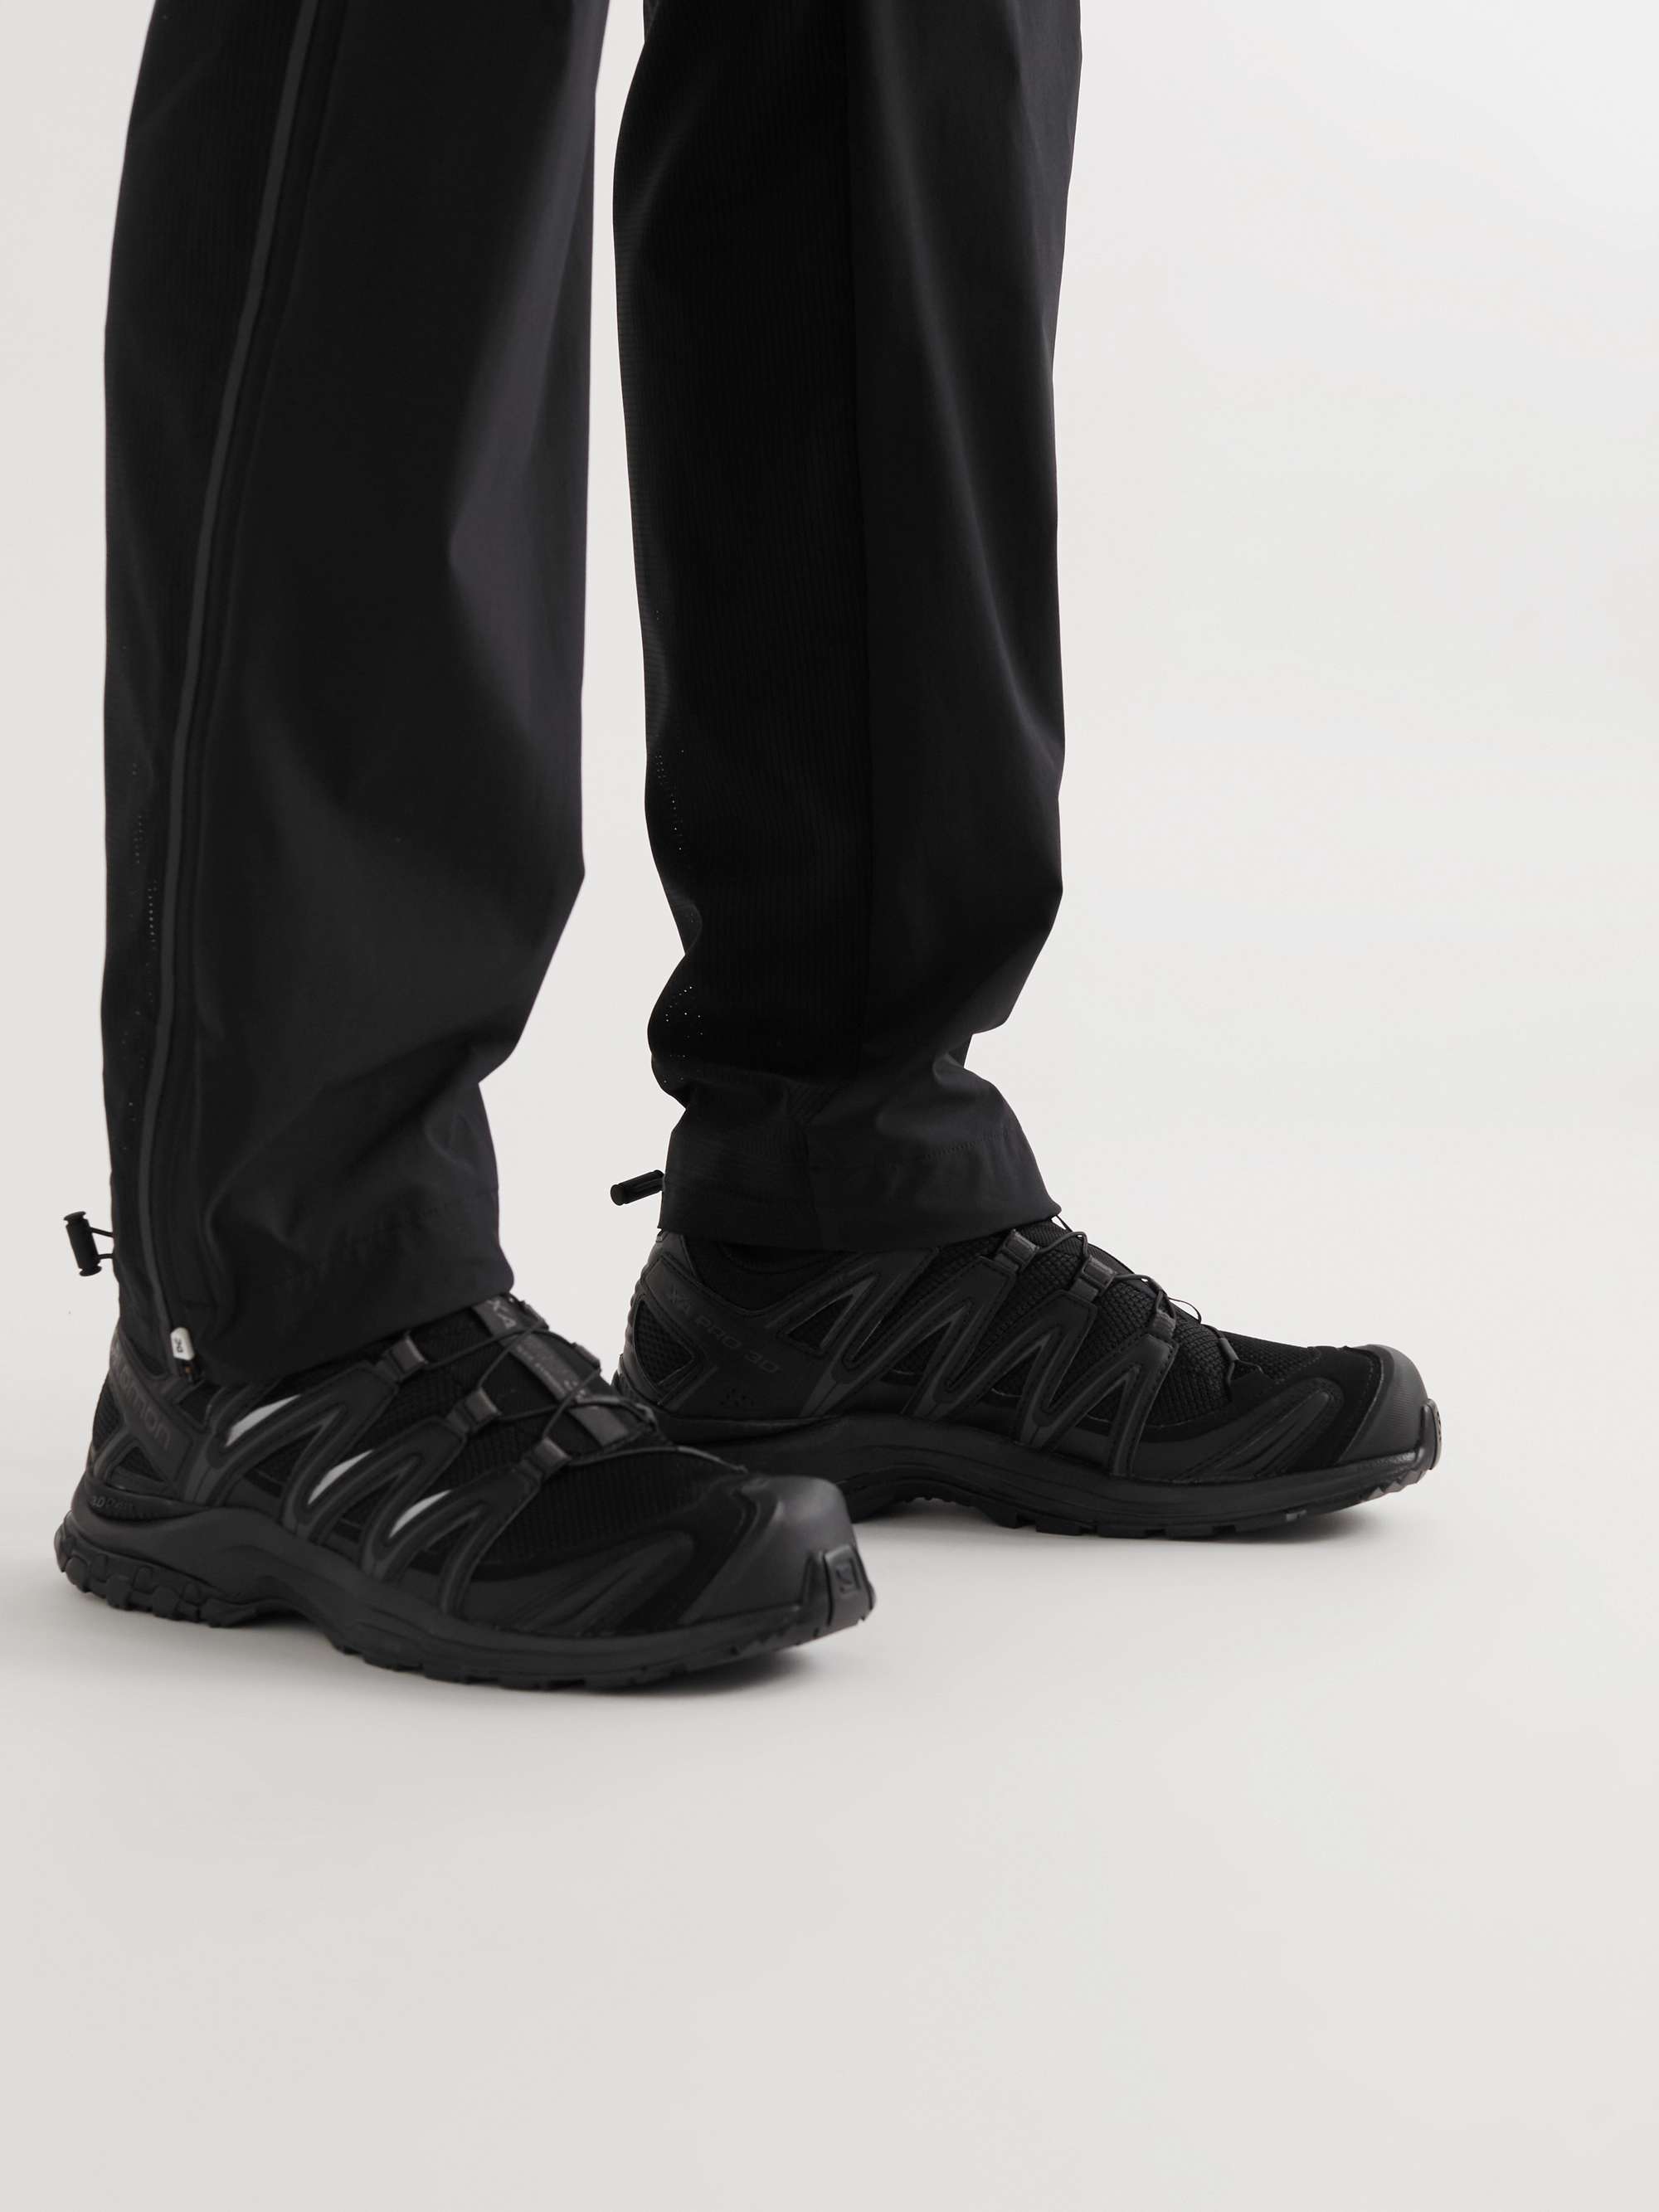 SALOMON XA Pro 3D Rubber-Trimmed Mesh Trail Running Sneakers